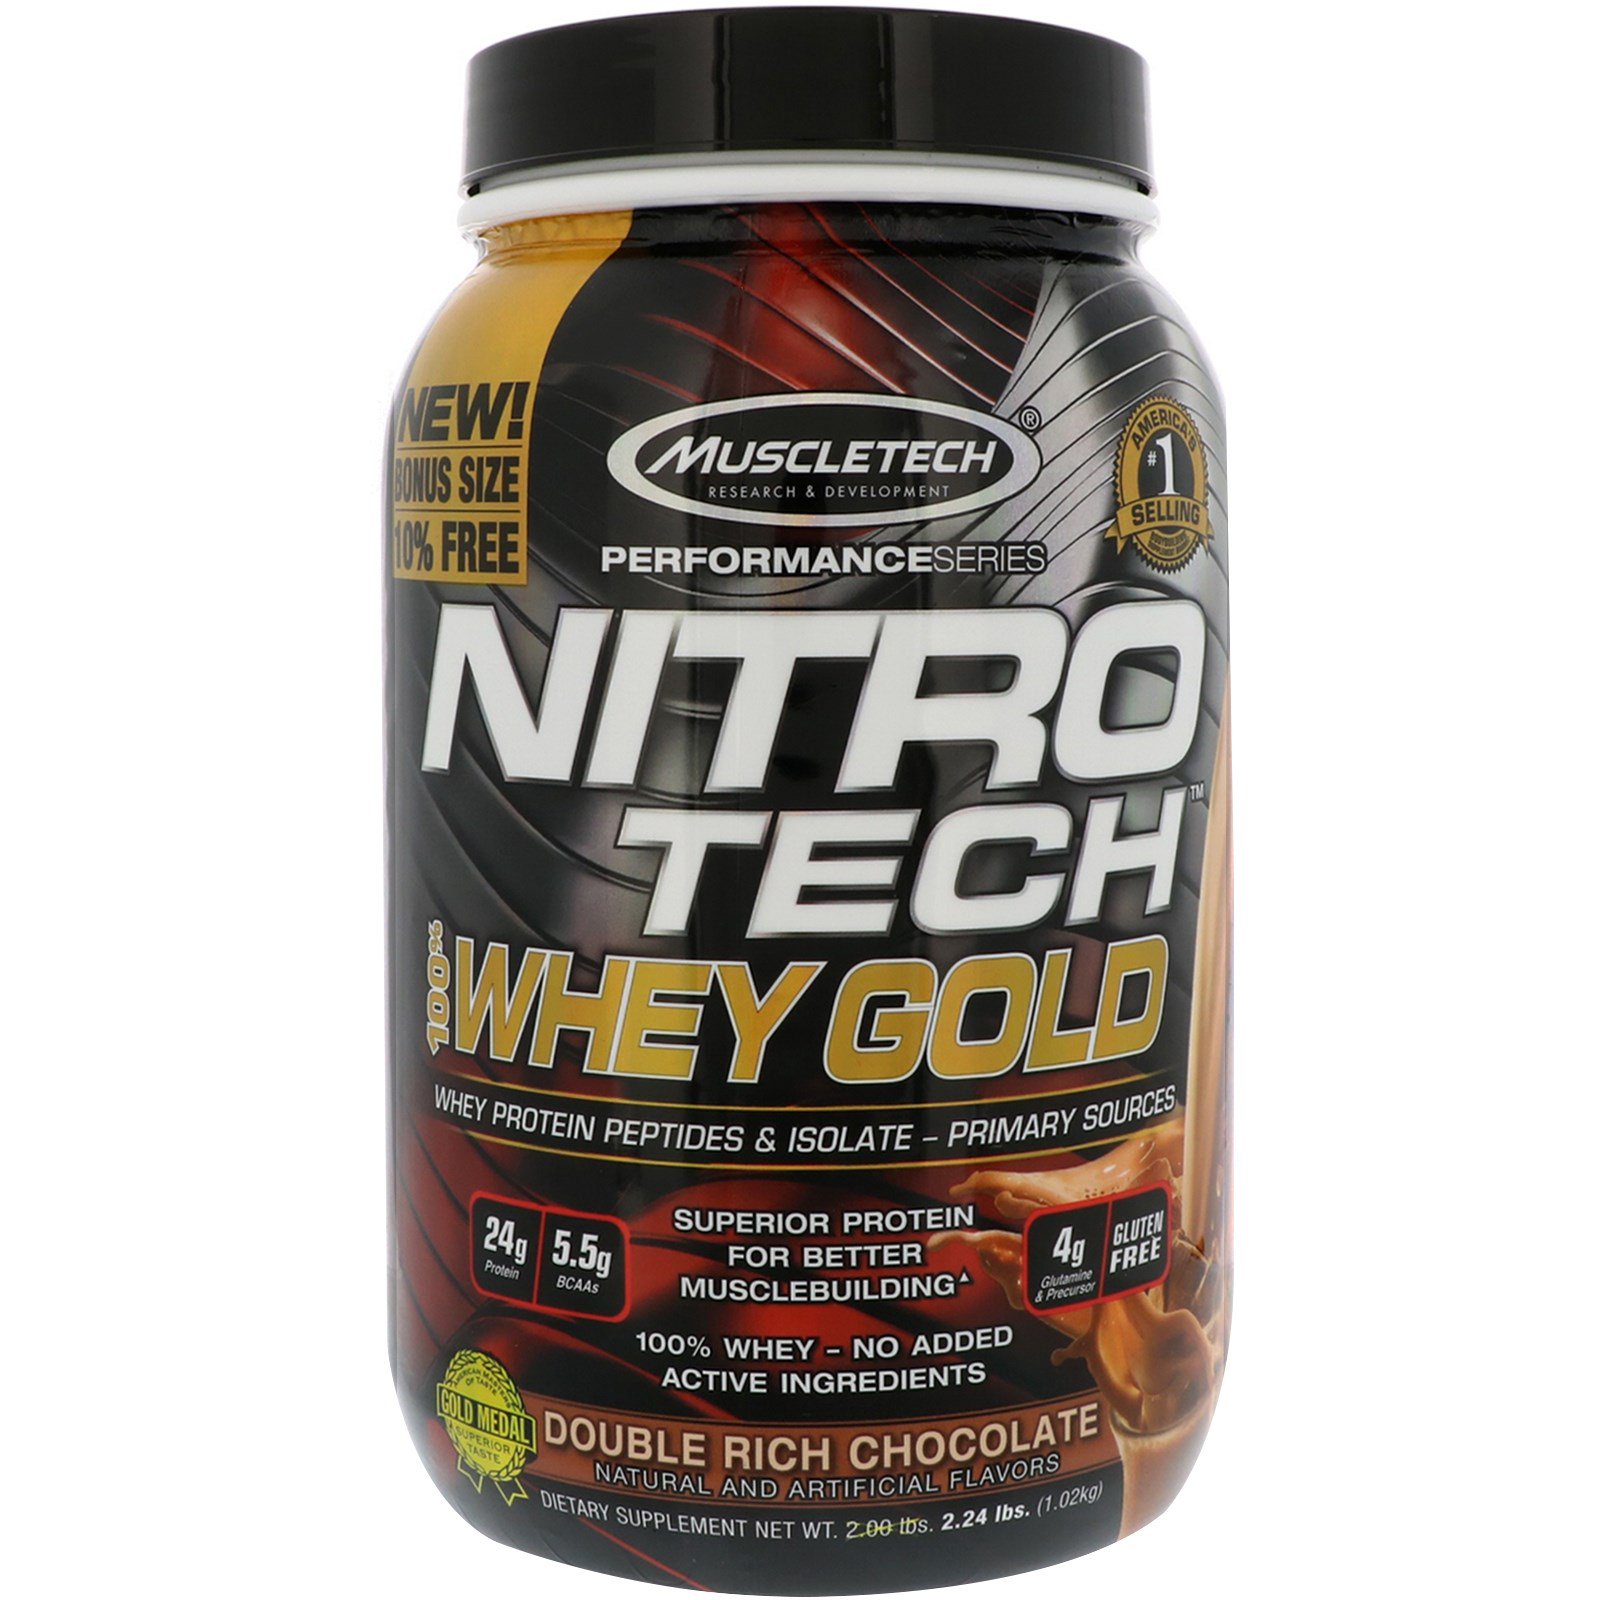 Muscletech, Nitro Tech, 100% сыворотка Gold, Двойной шоколад, 2.24 фунта (1.02кг)